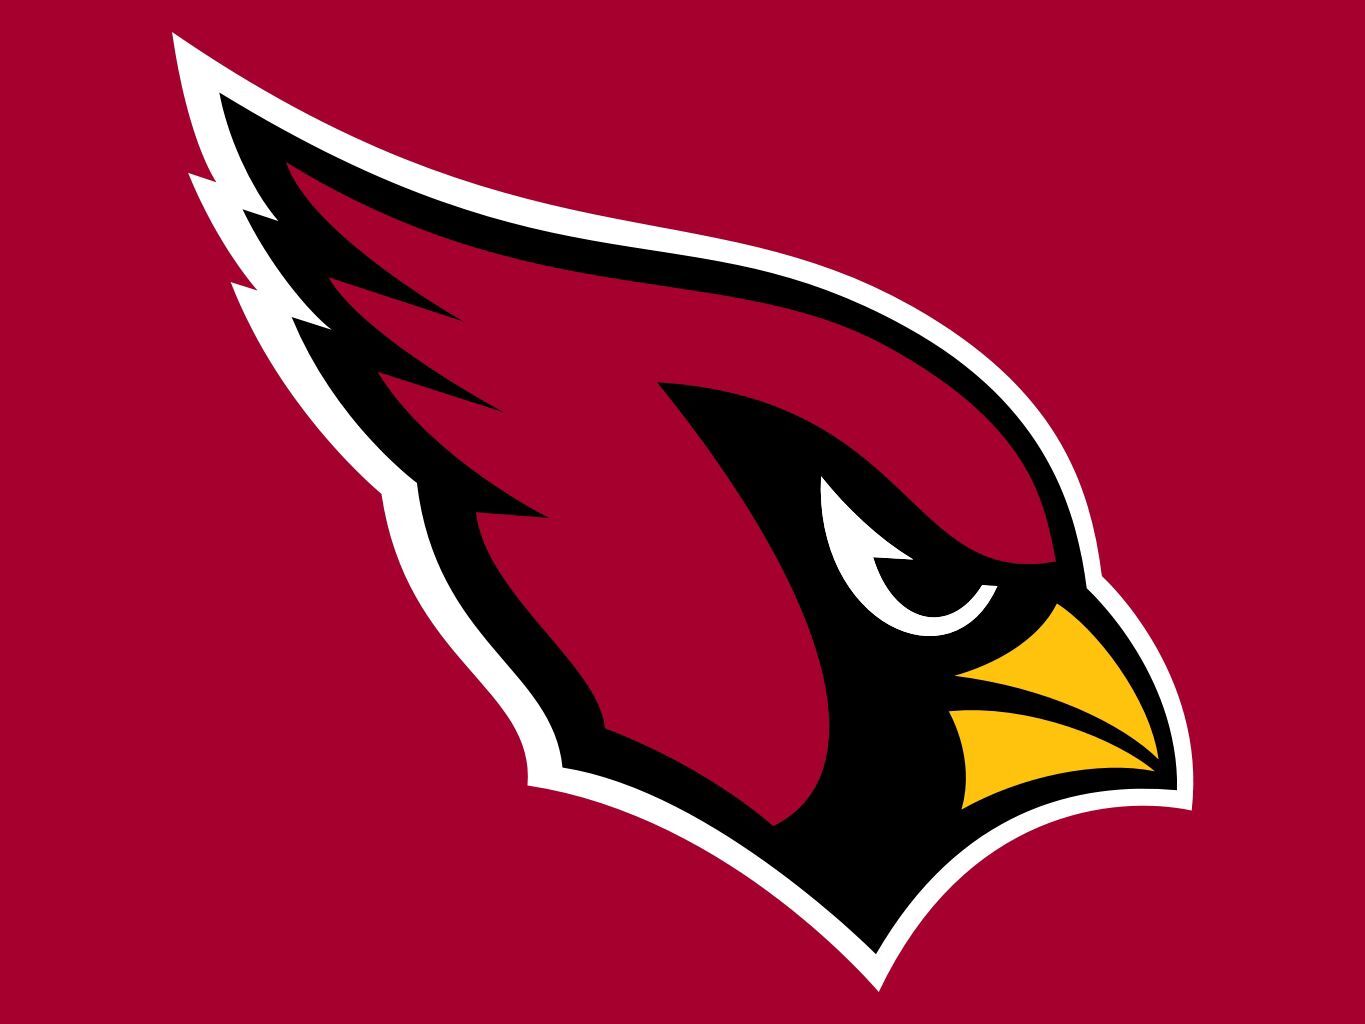 Arizona Cardinals - Wikipedia